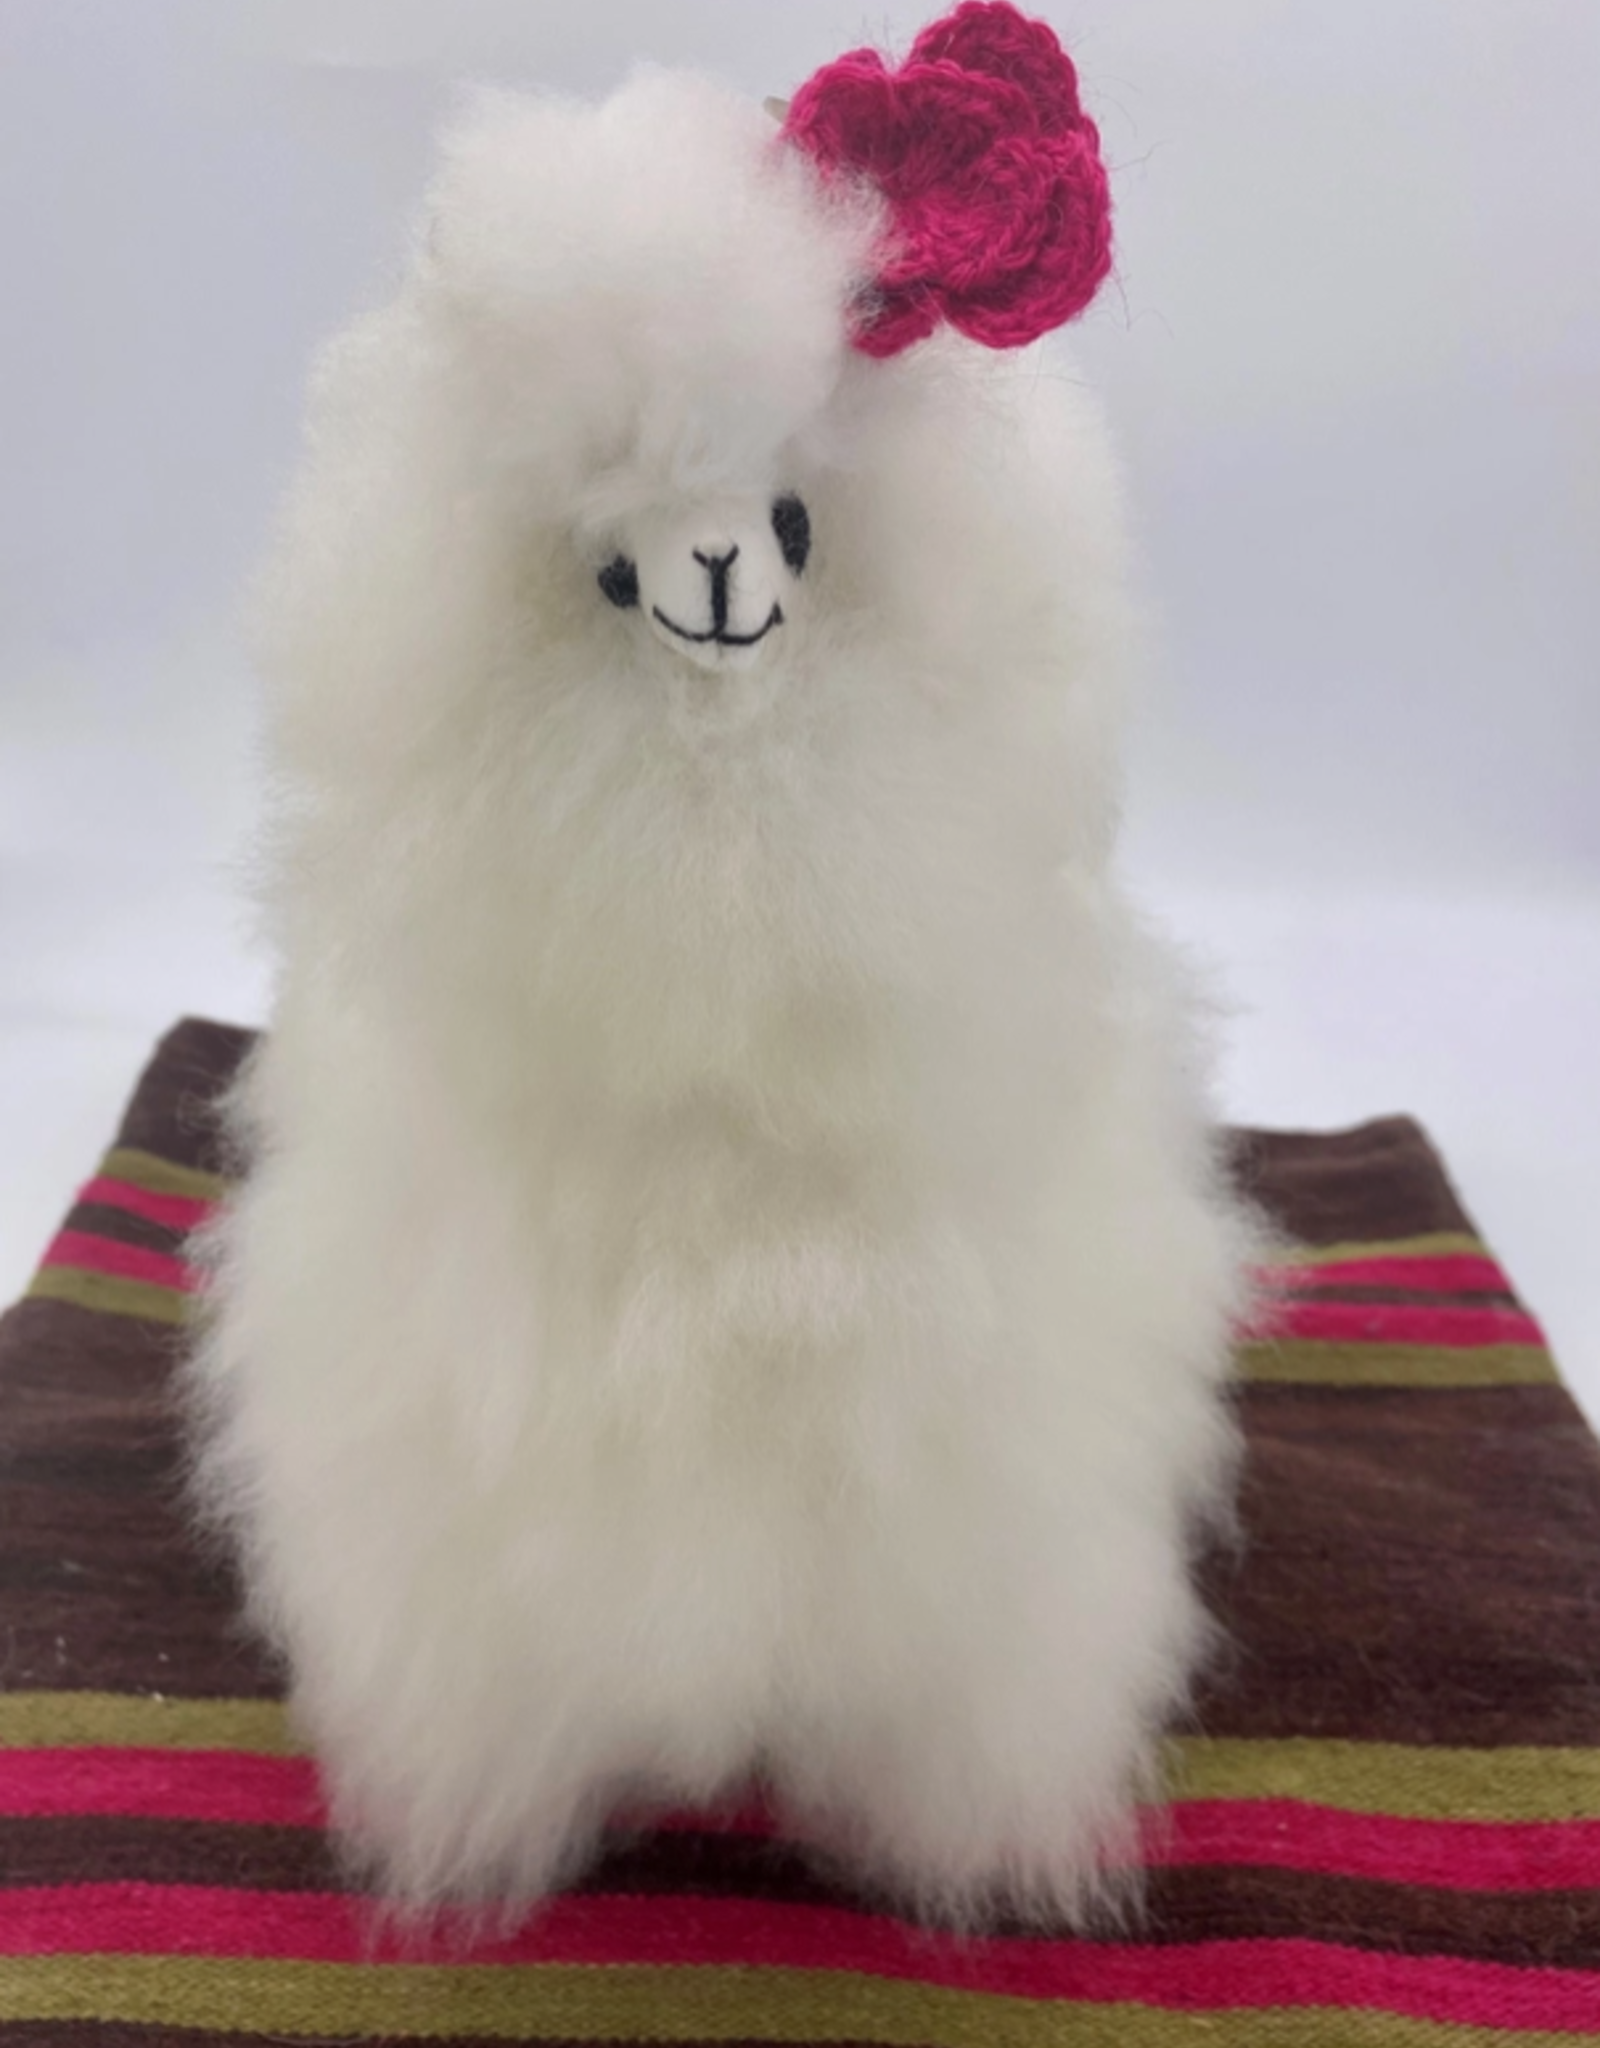 Blossom Inspirations Alpaca Standing Fur Toy 10" x 12"